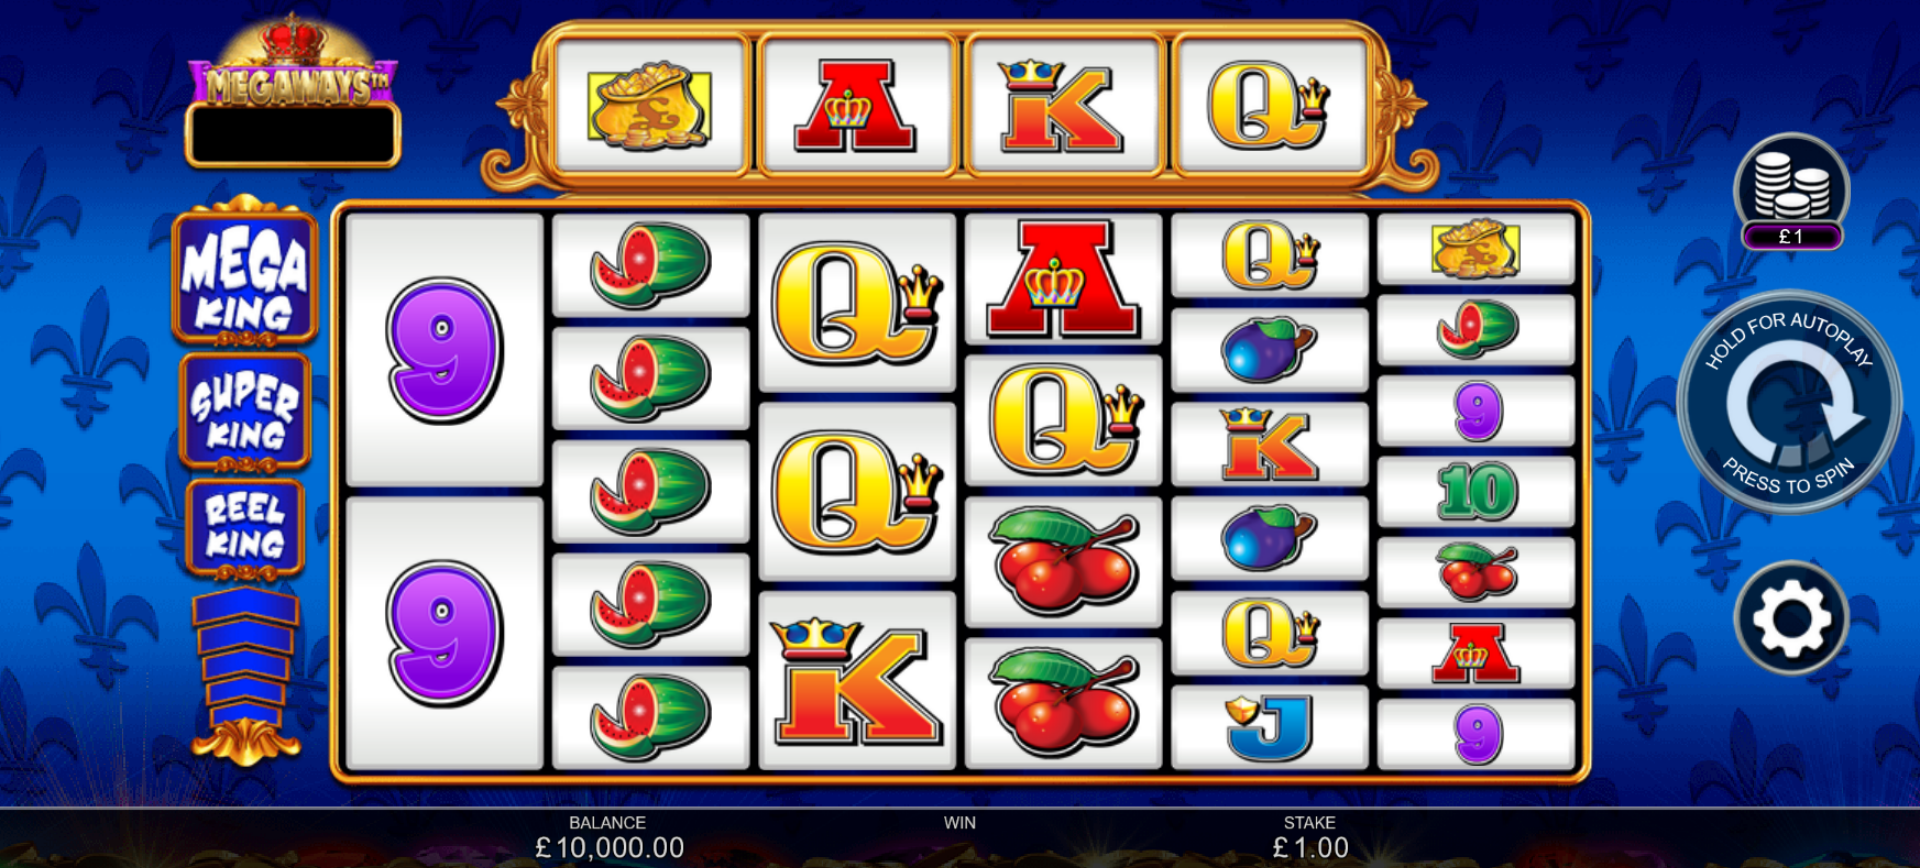 griglia del gioco slot machine reel king megaways